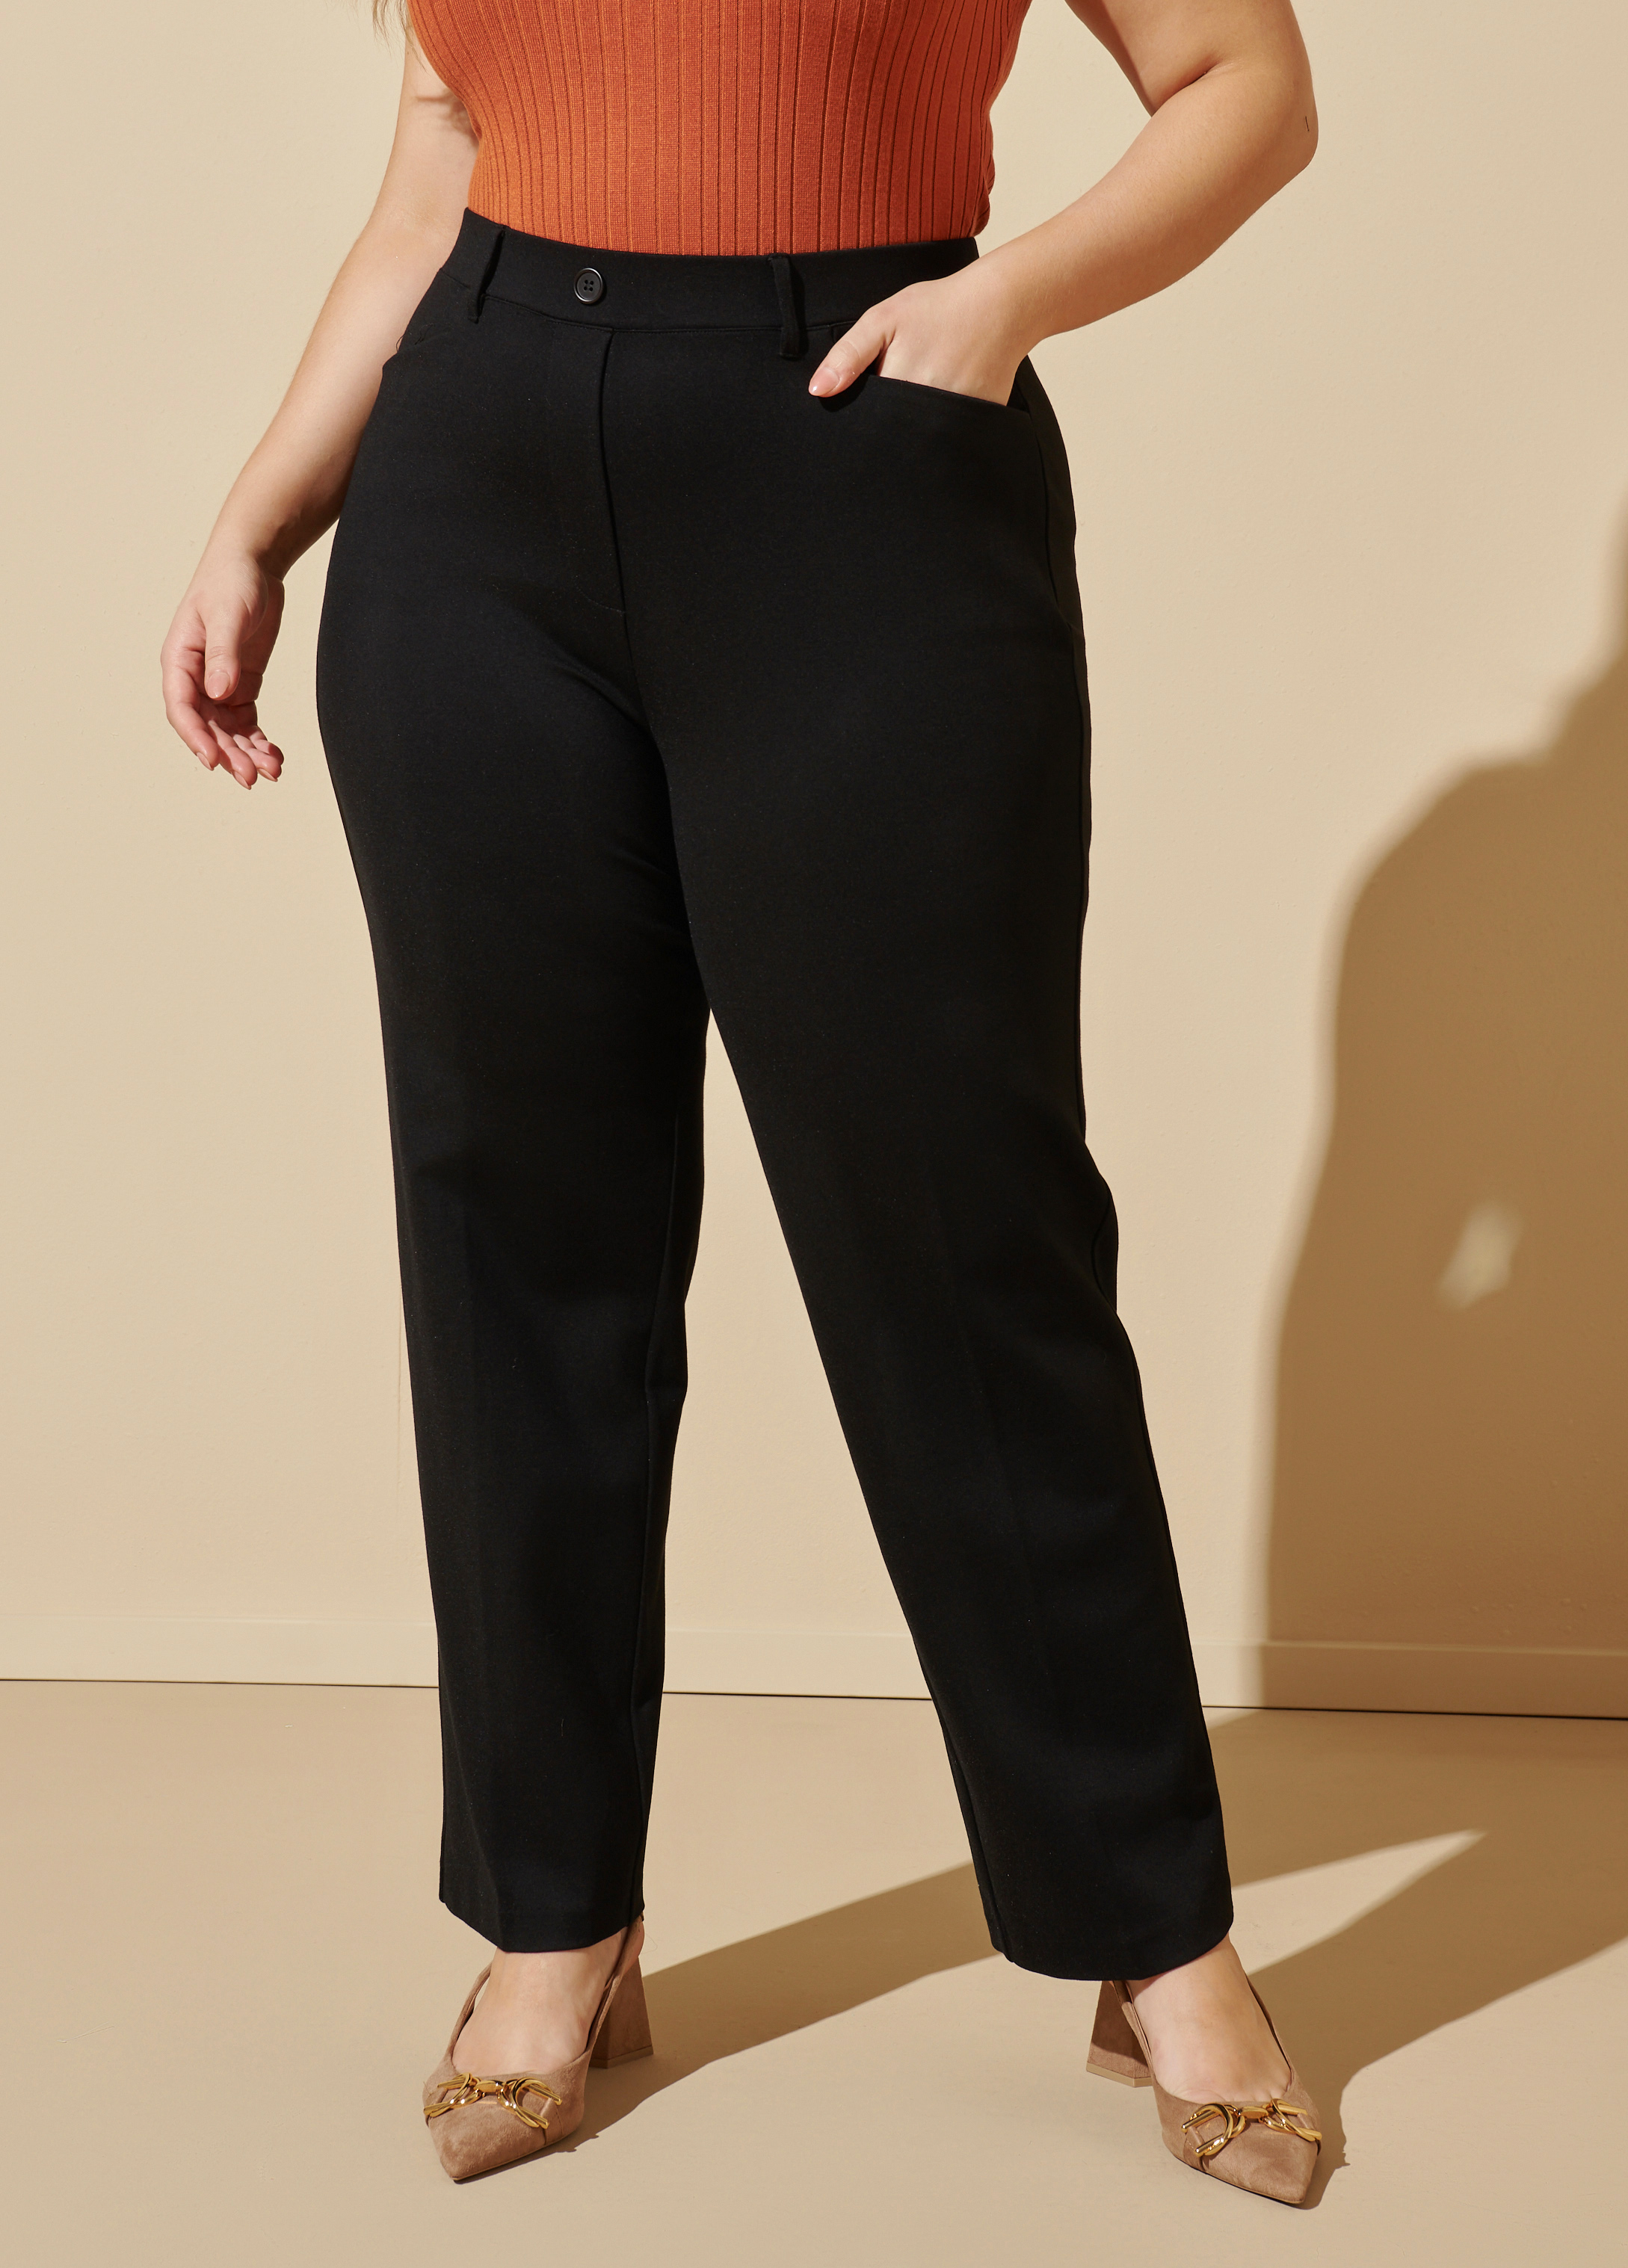 H&H Women's Plus Ponte Work Pants Black